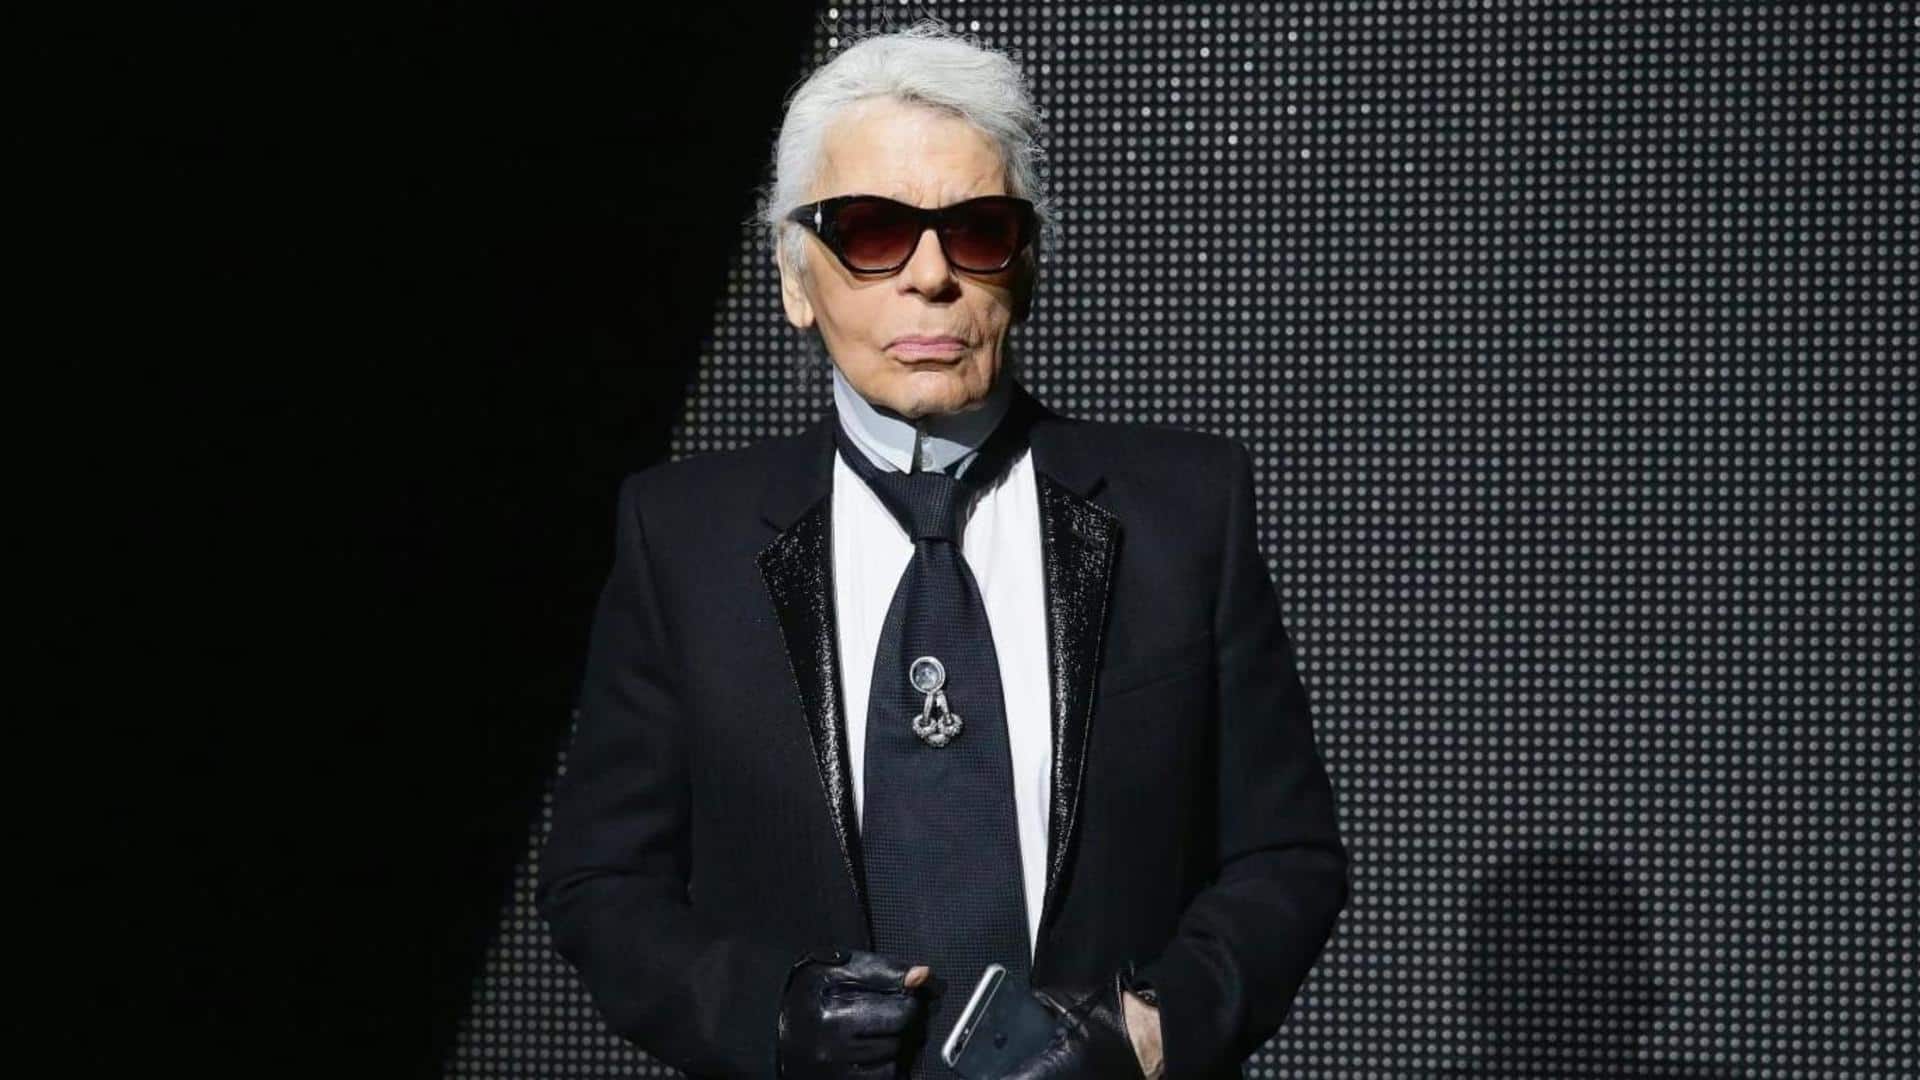 Who was Karl Lagerfeld, designer who inspired Met Gala theme